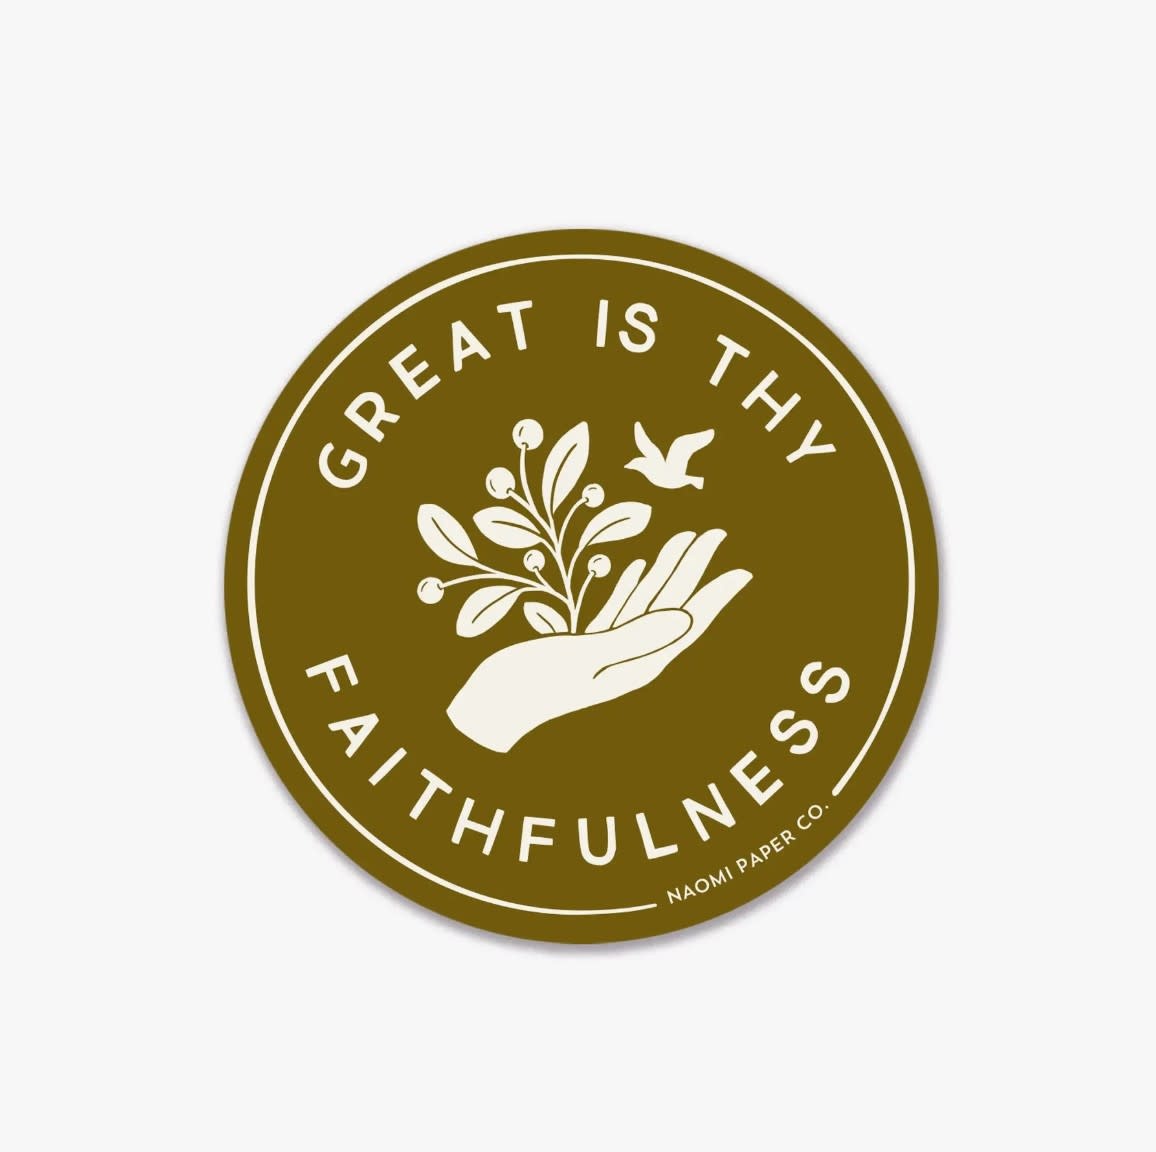 Great Is Thy Faithfulness Sticker